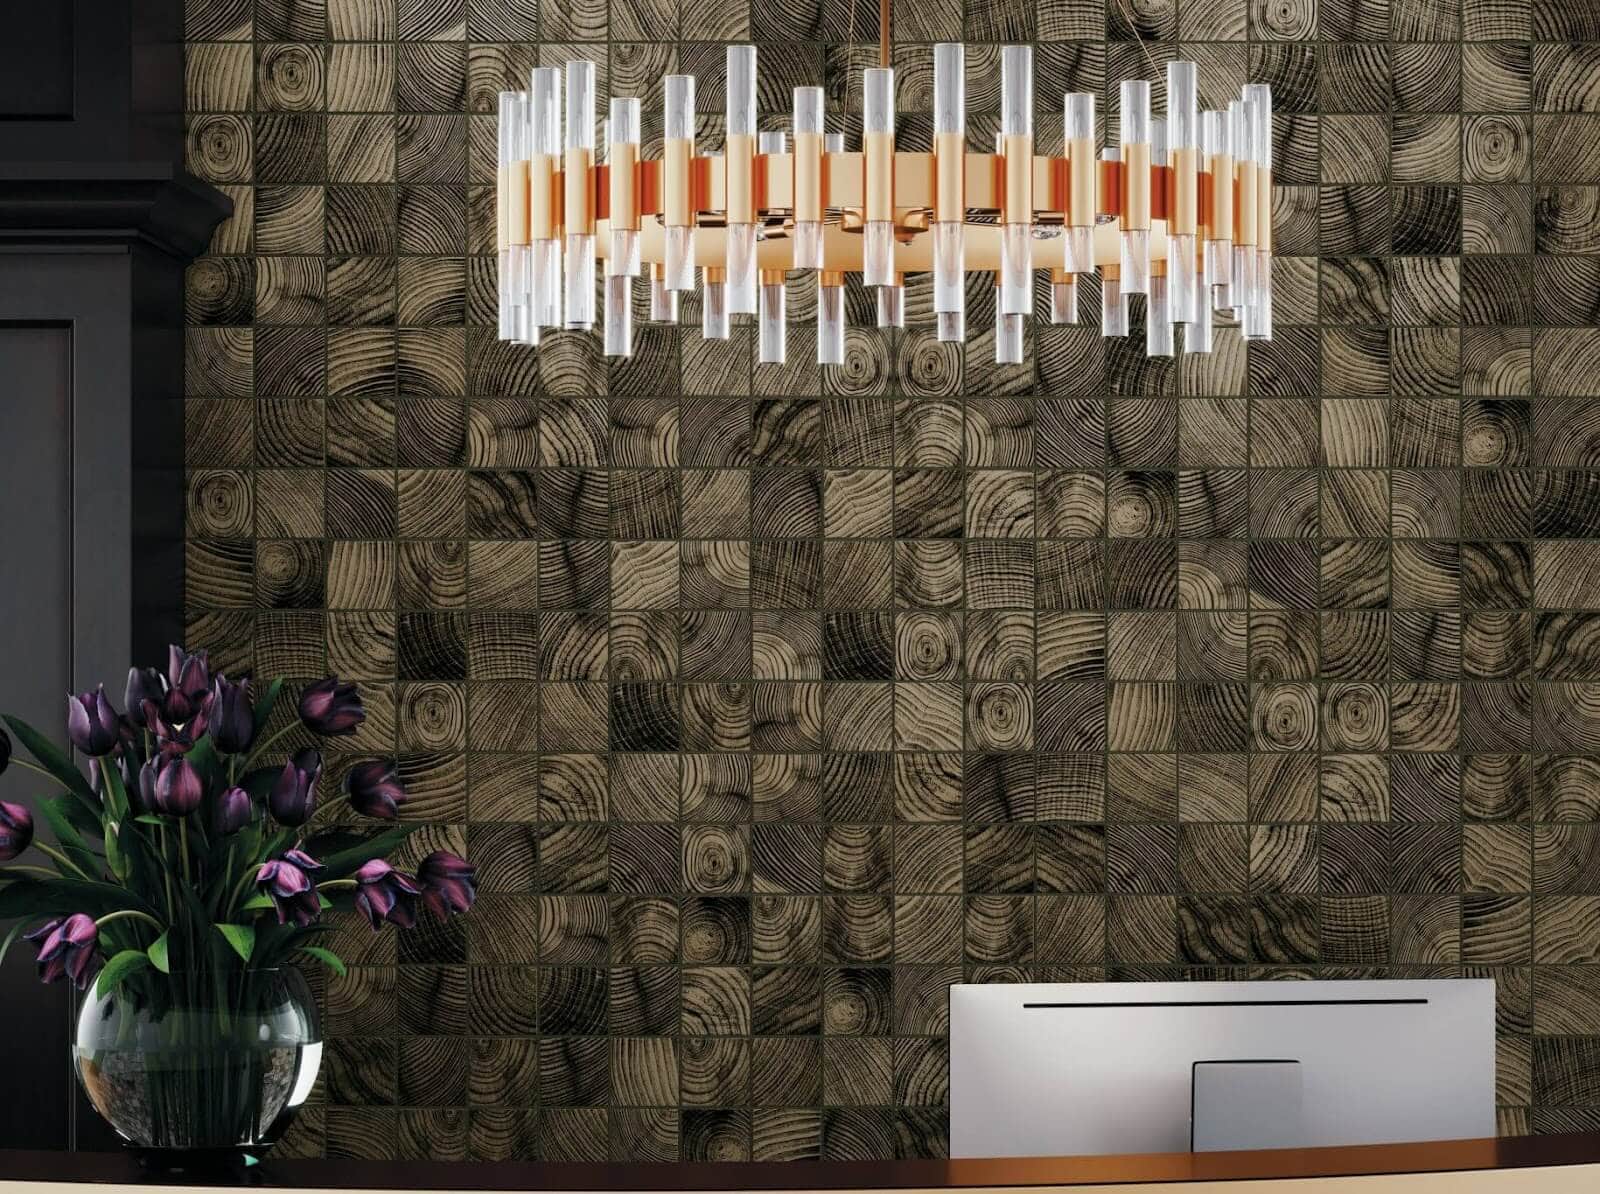 Endcut wood grain-look ceramic tiles for lobby's walls
